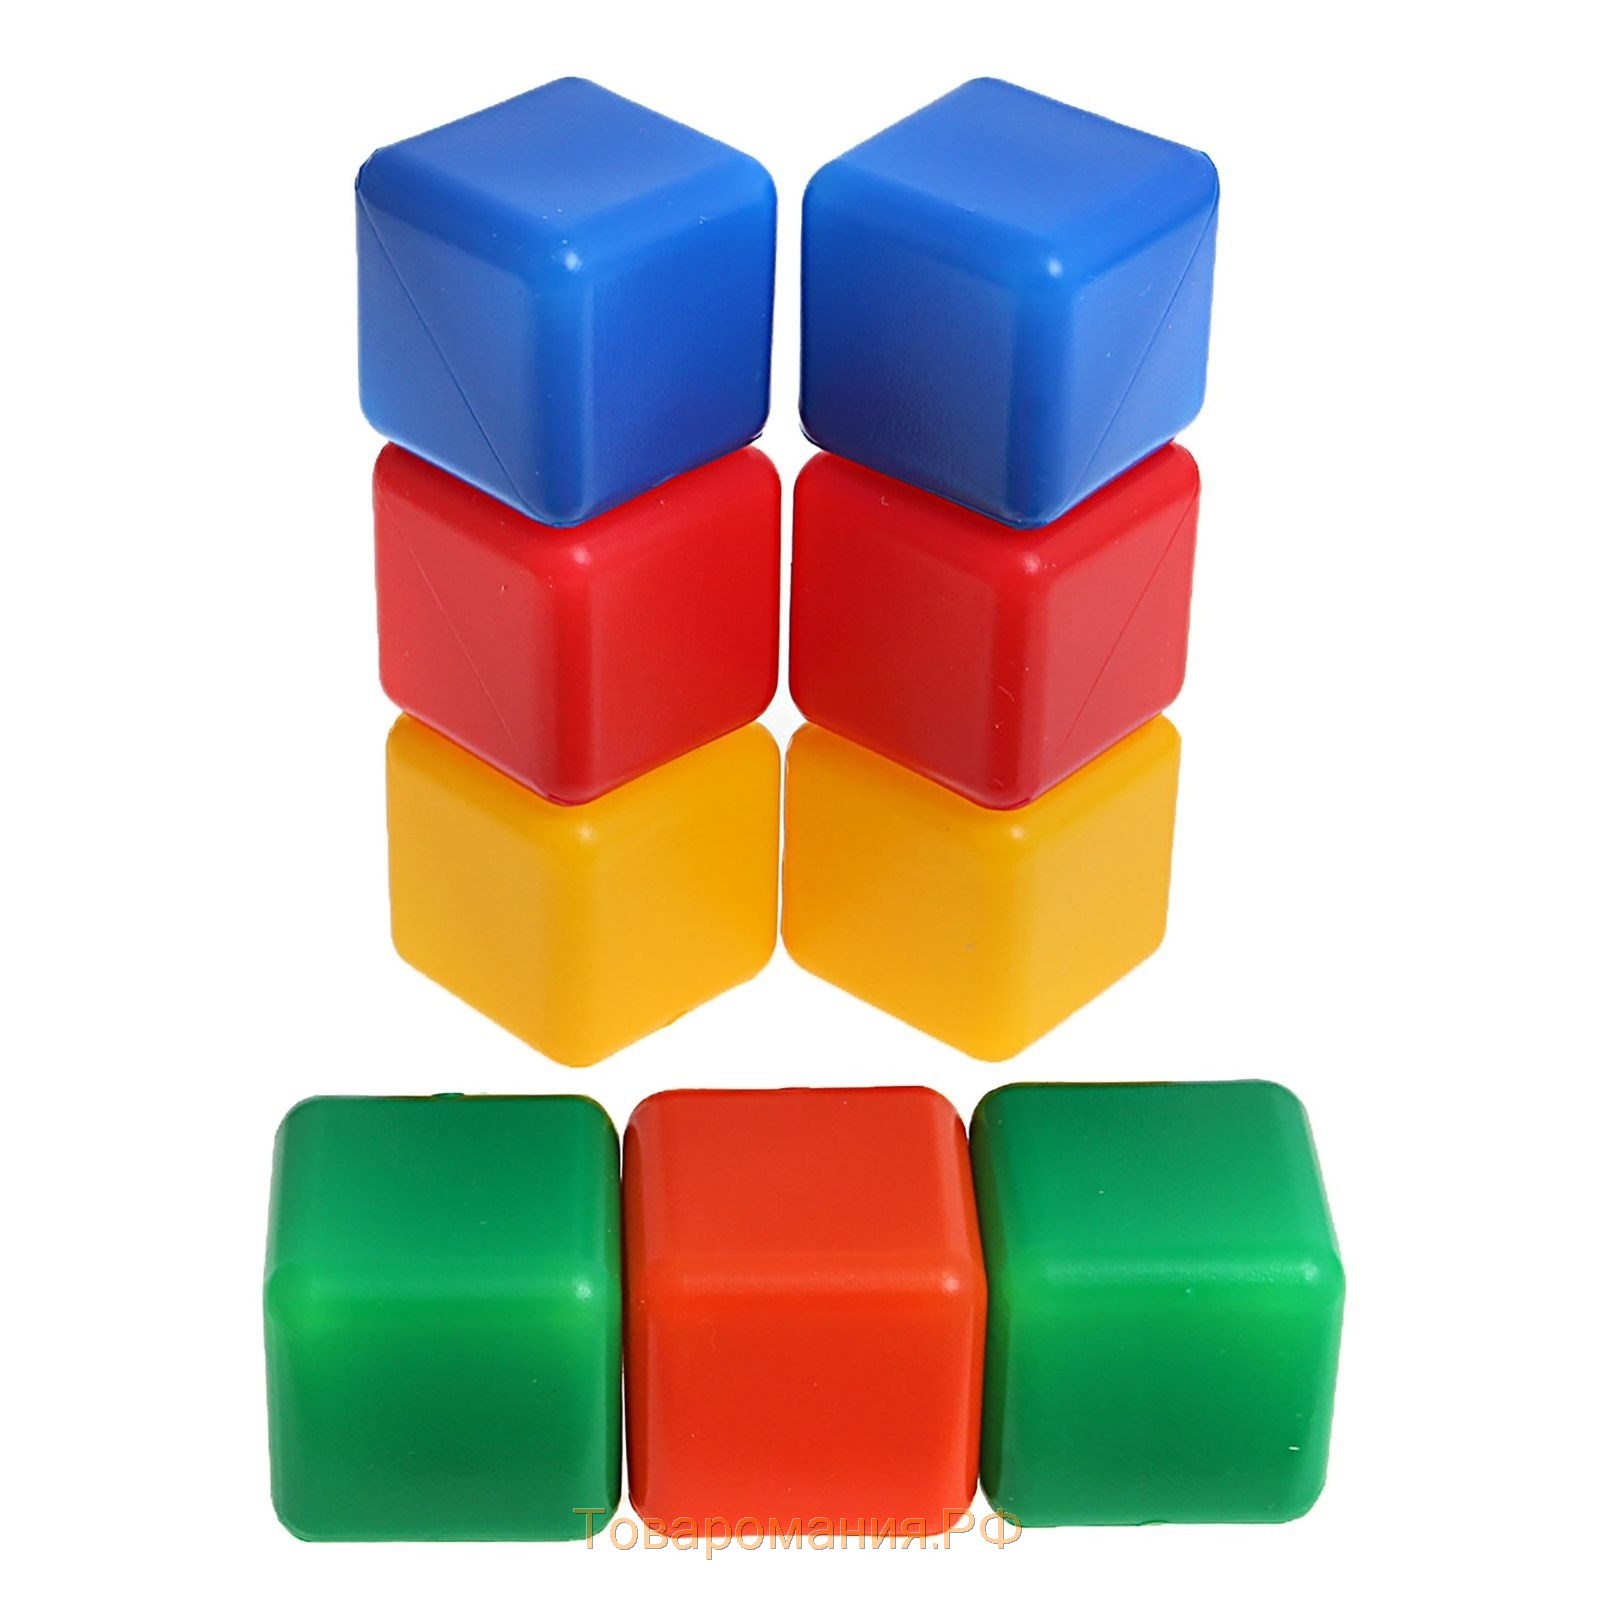 Покажи картинку кубики. Кубики пластмассовые. Кубики детские пластмассовые. Кубики цветные пластмассовые. Разноцветные кубики.